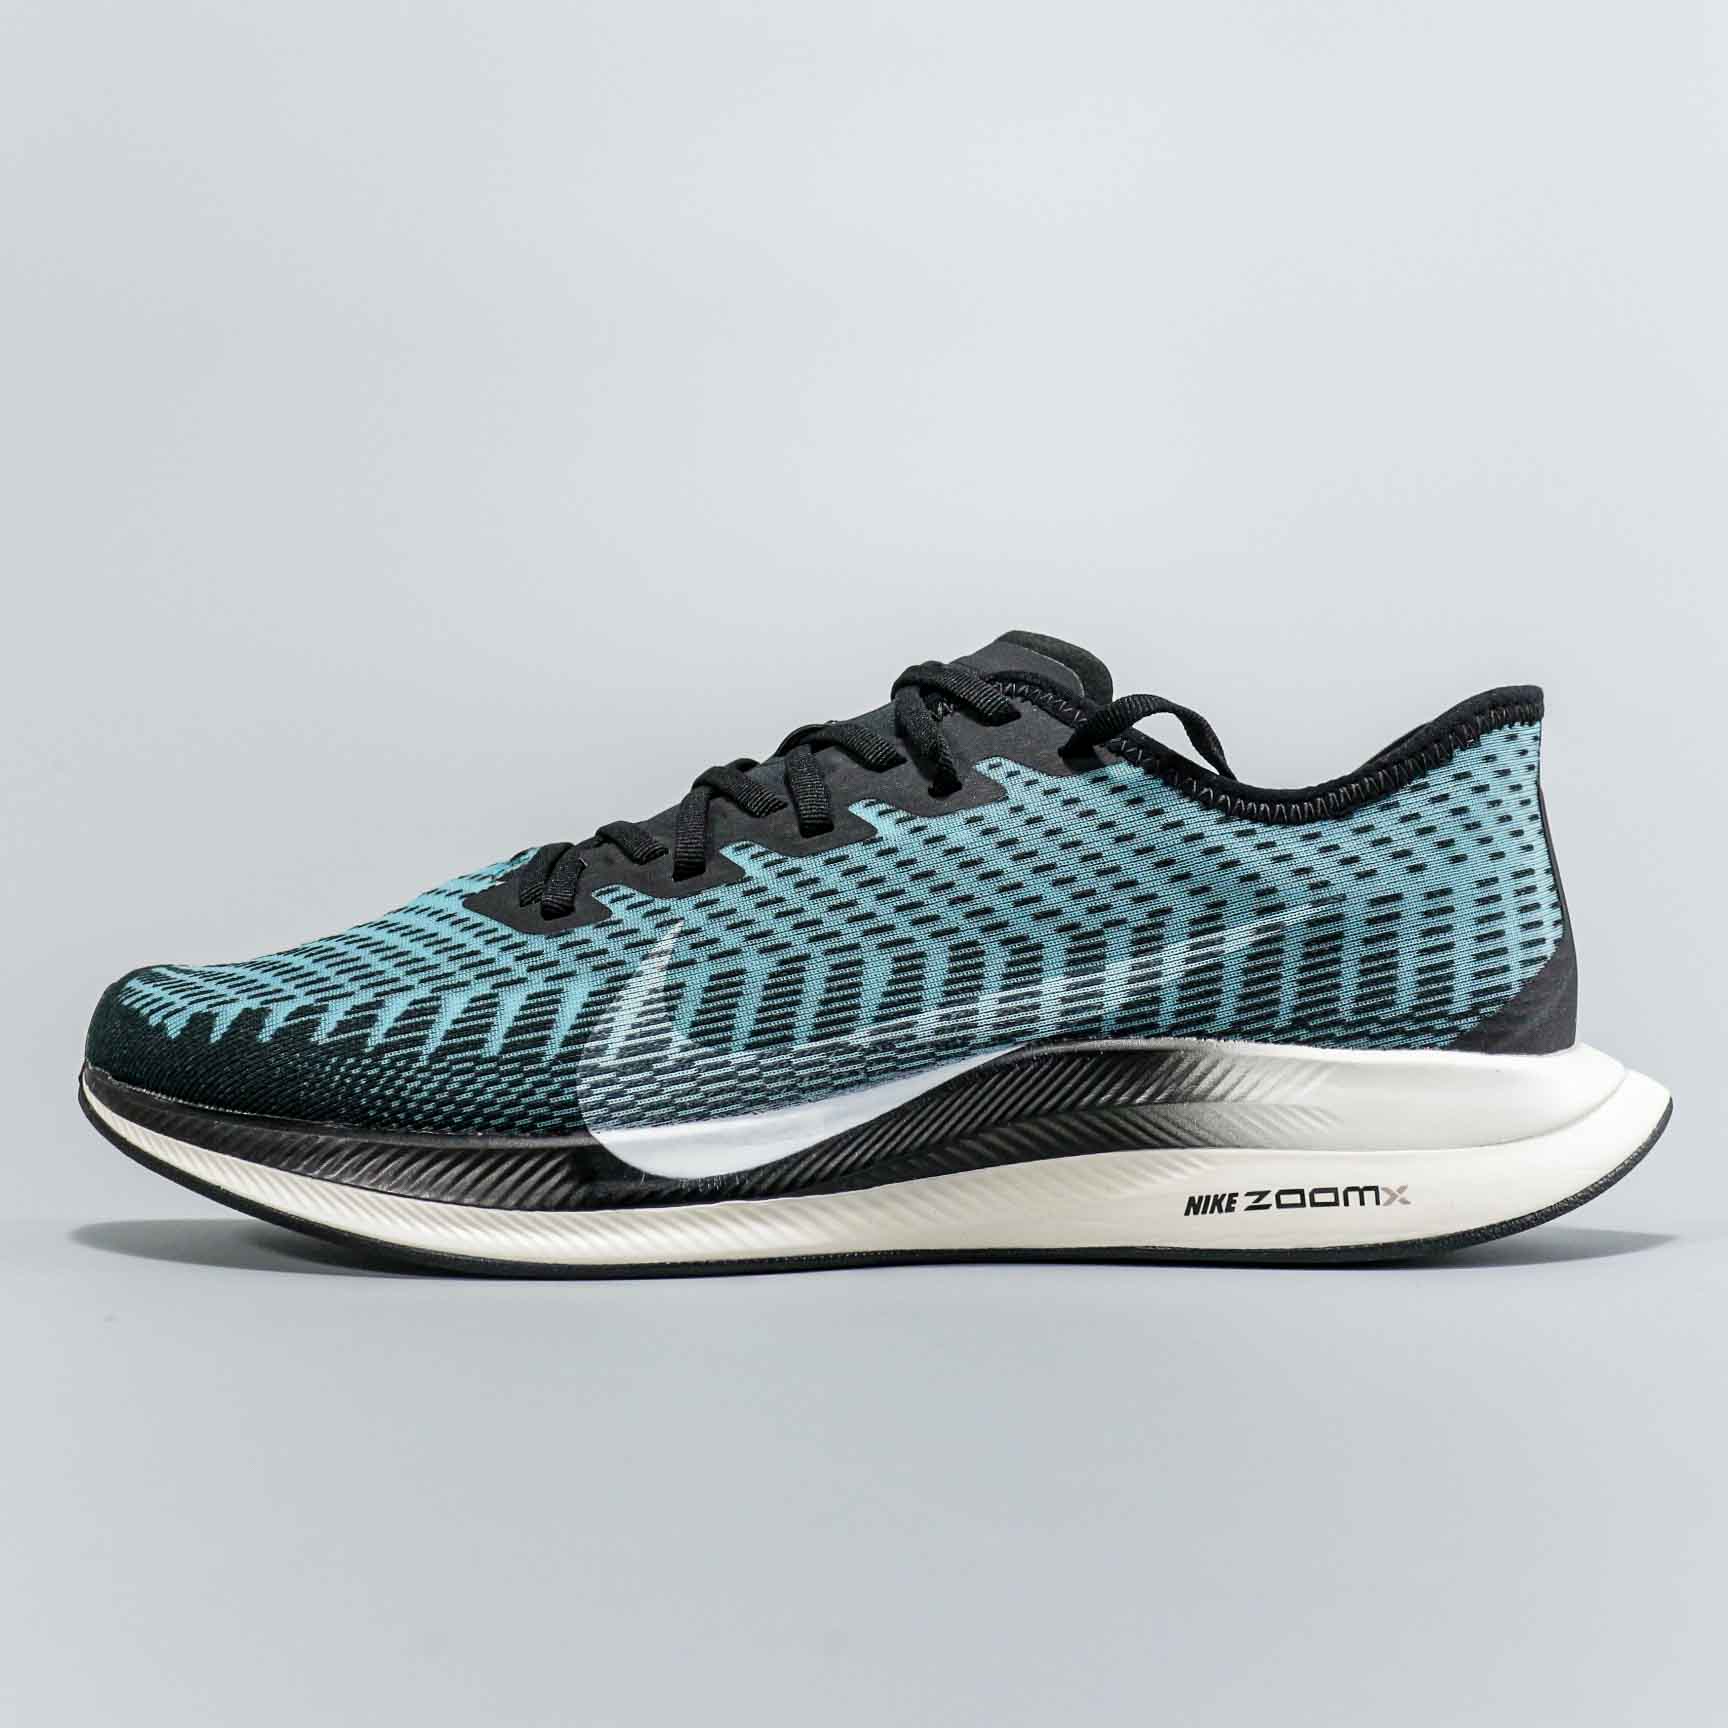 2020 Nike Zoom Pegasus Turbo 2 Blue Black White Running Shoes - Click Image to Close